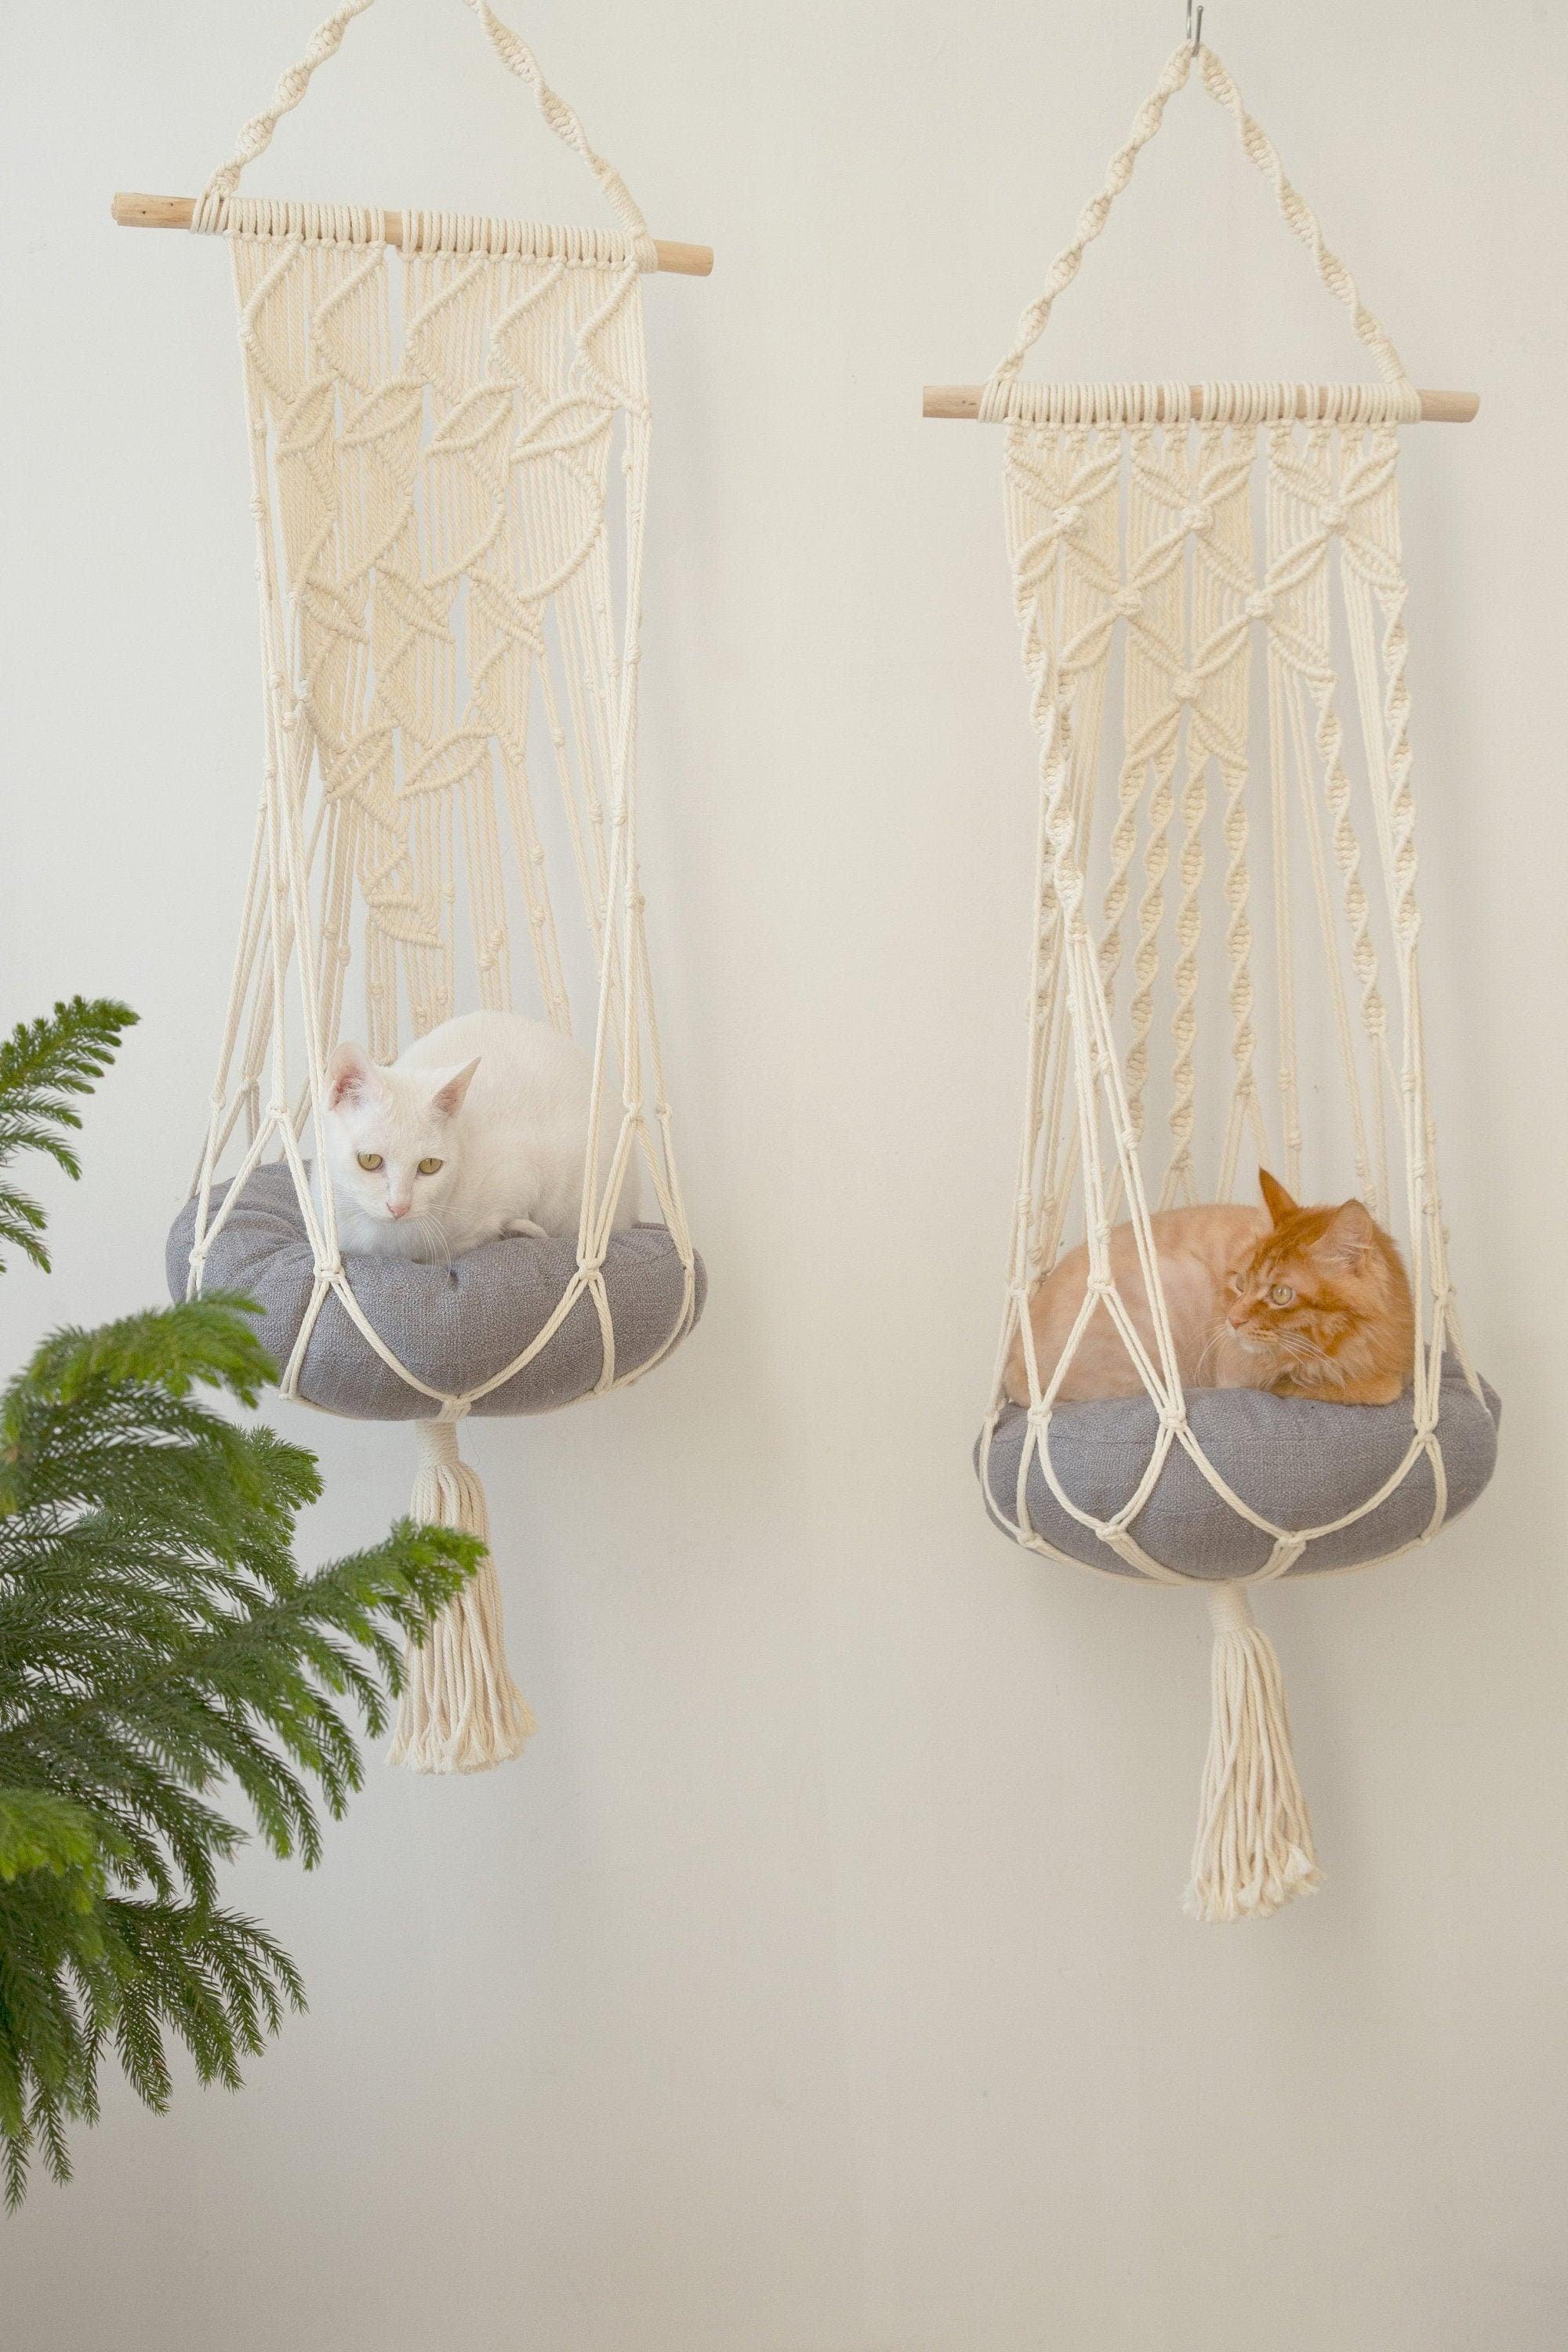 Meow Macramé Swing  - Hanging Cat Bed